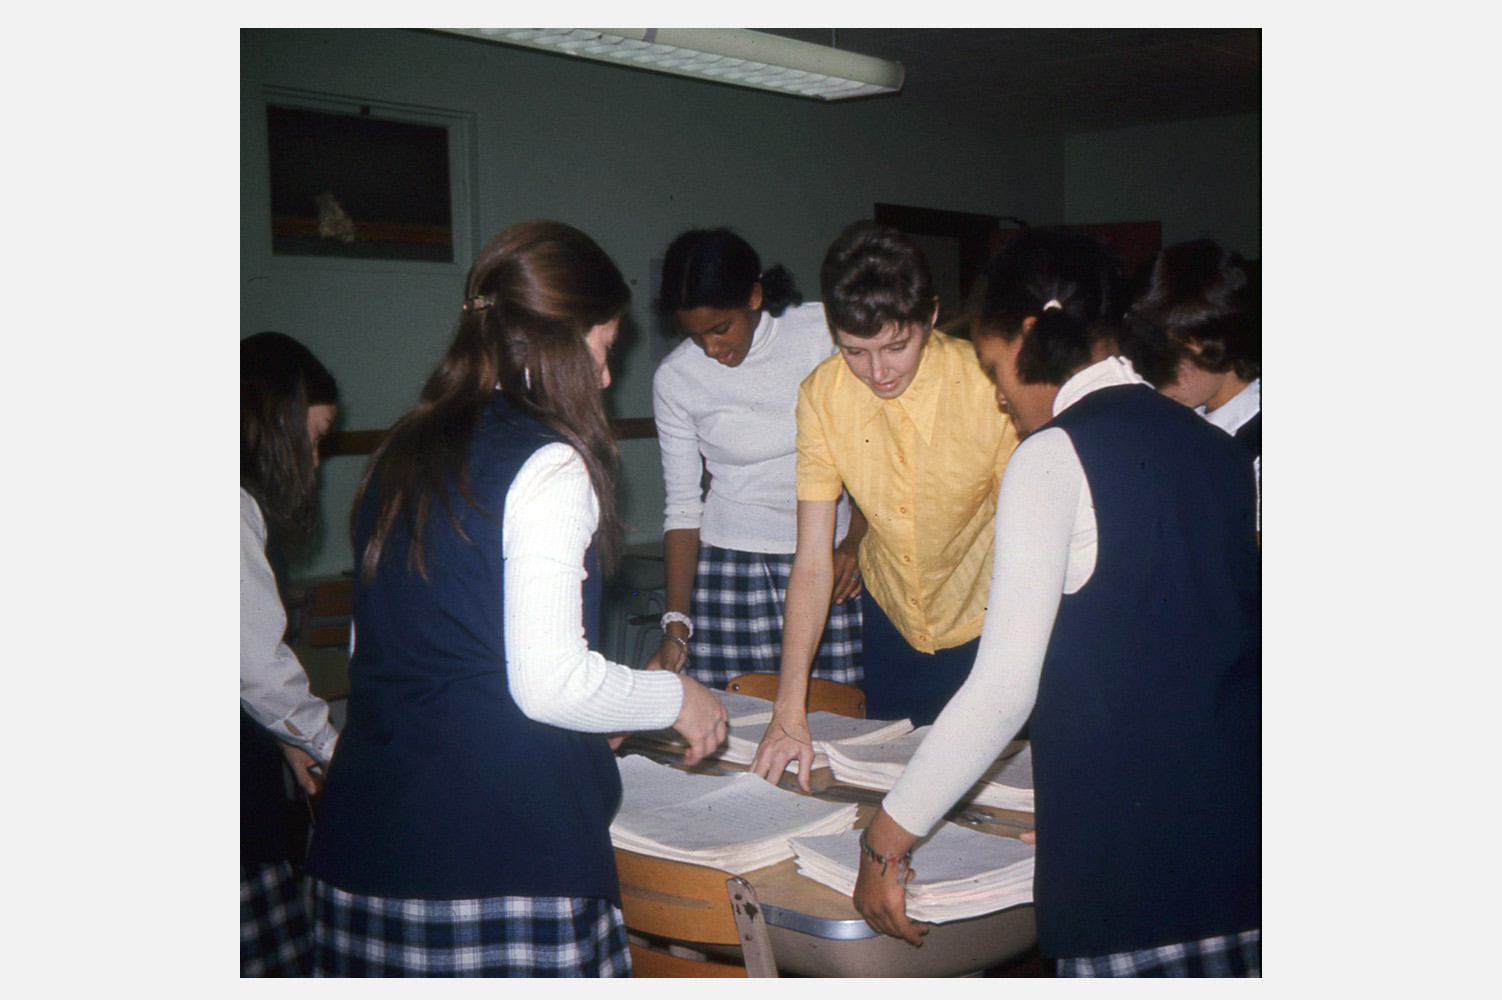 USA - Venerini Academy, 1973